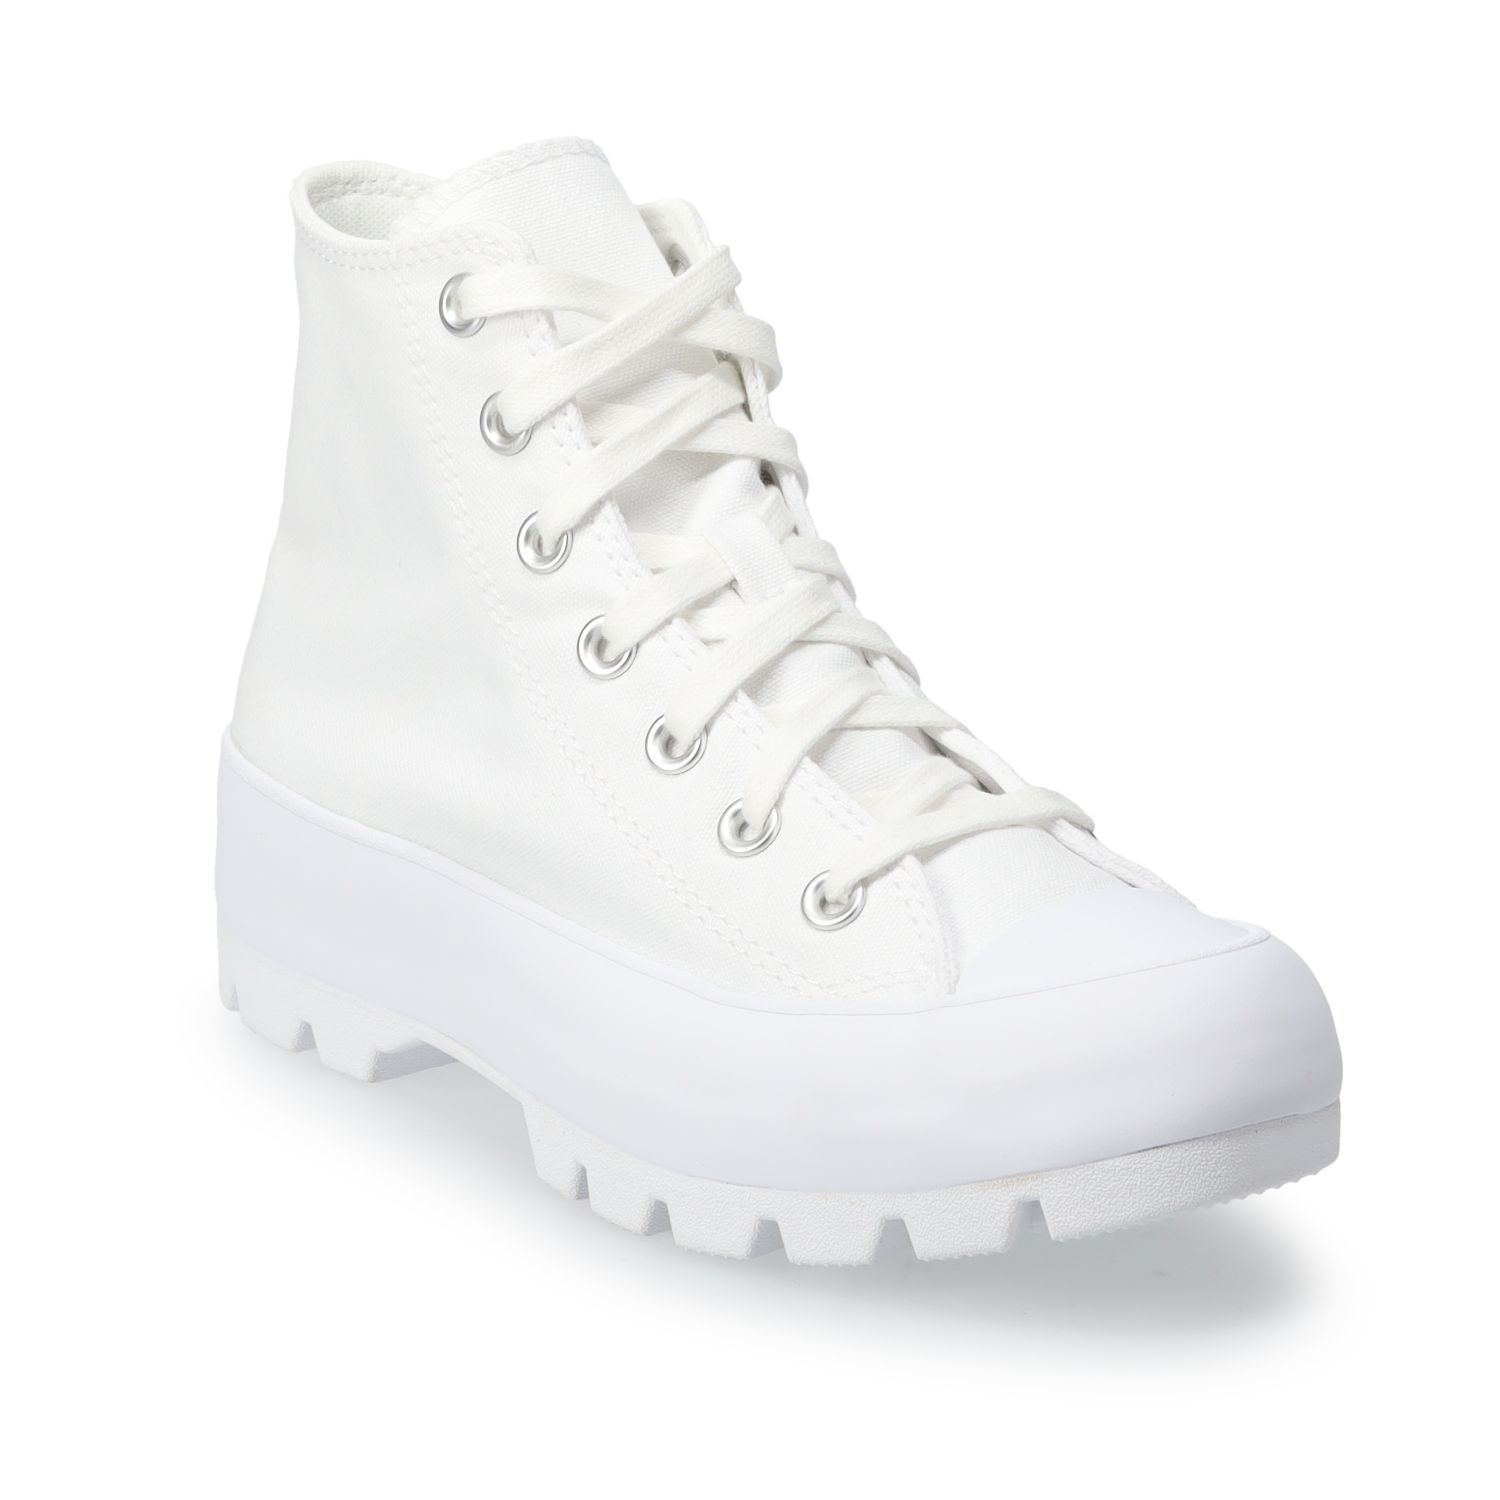 White Converse Chuck Taylor Shoes 